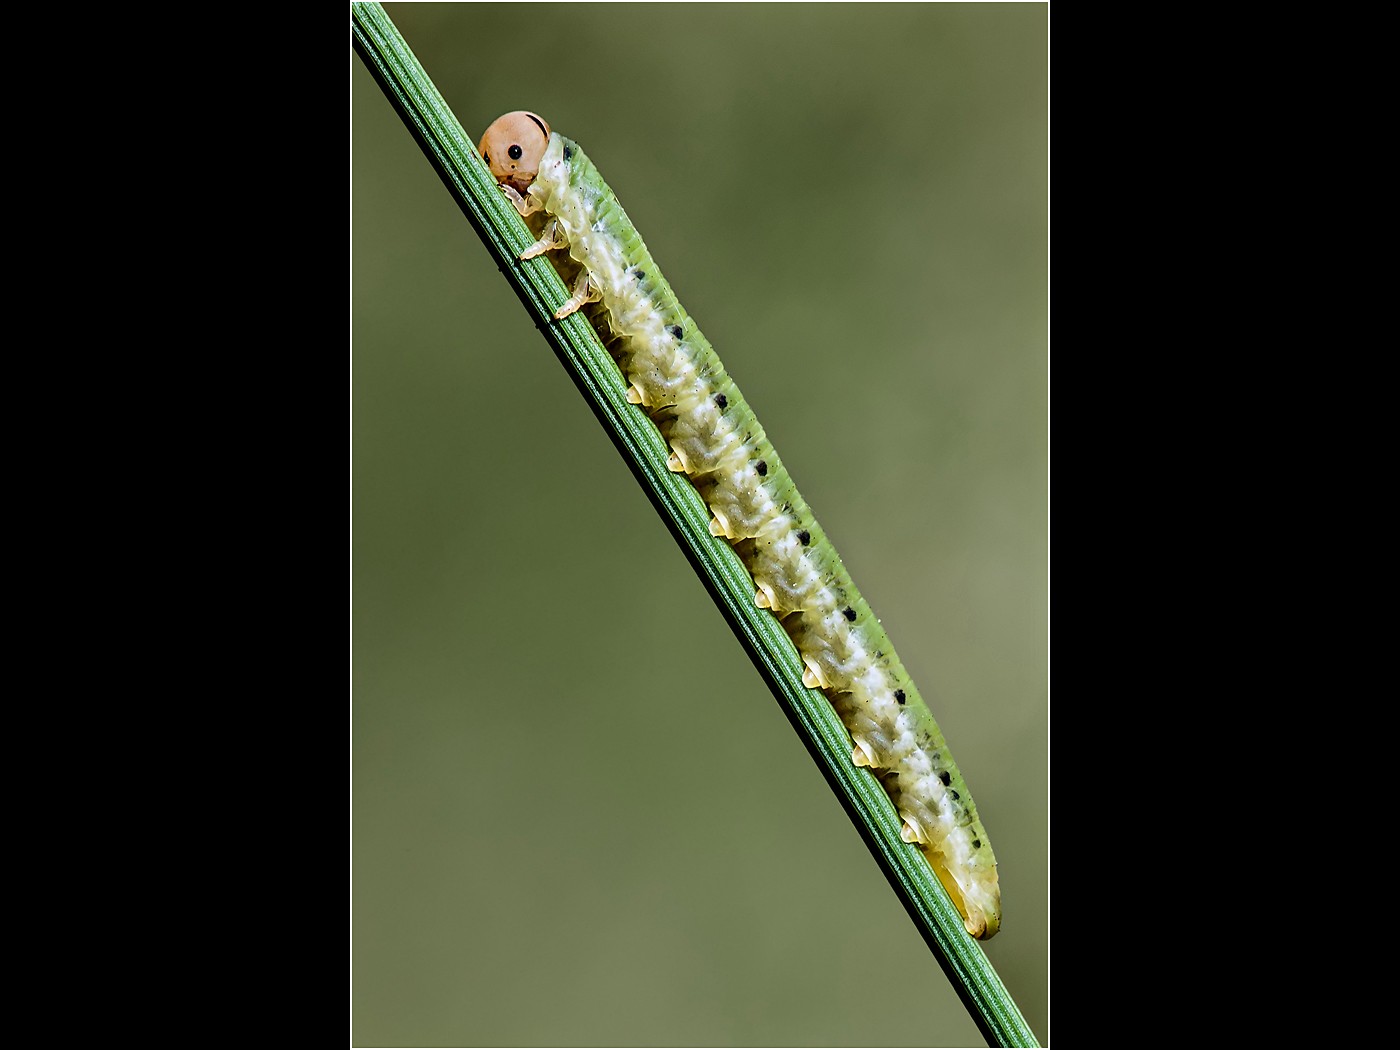 Sawfly Larvae on a Stem of Grass